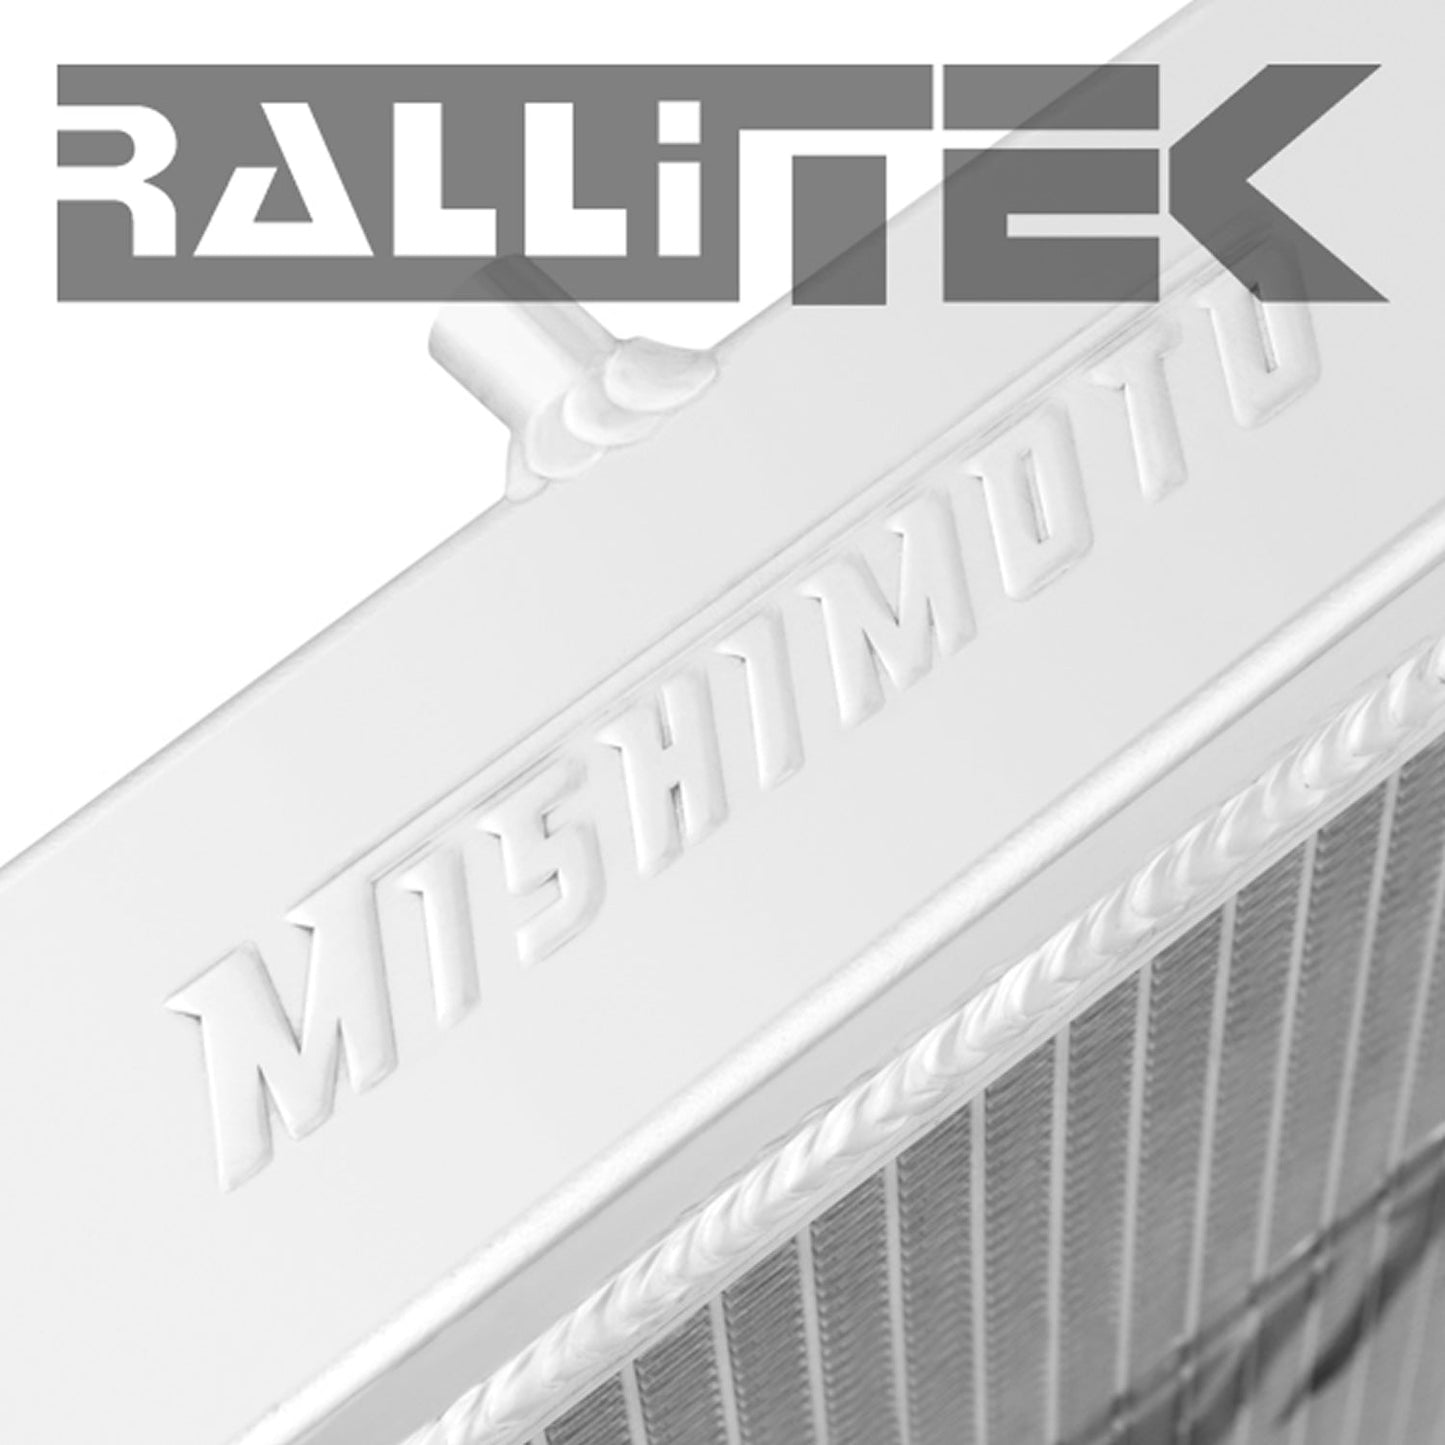 Mishimoto Performance Aluminum Radiator Manual Transmission - WRX 2008-2014 / STI 2008-2015 / More